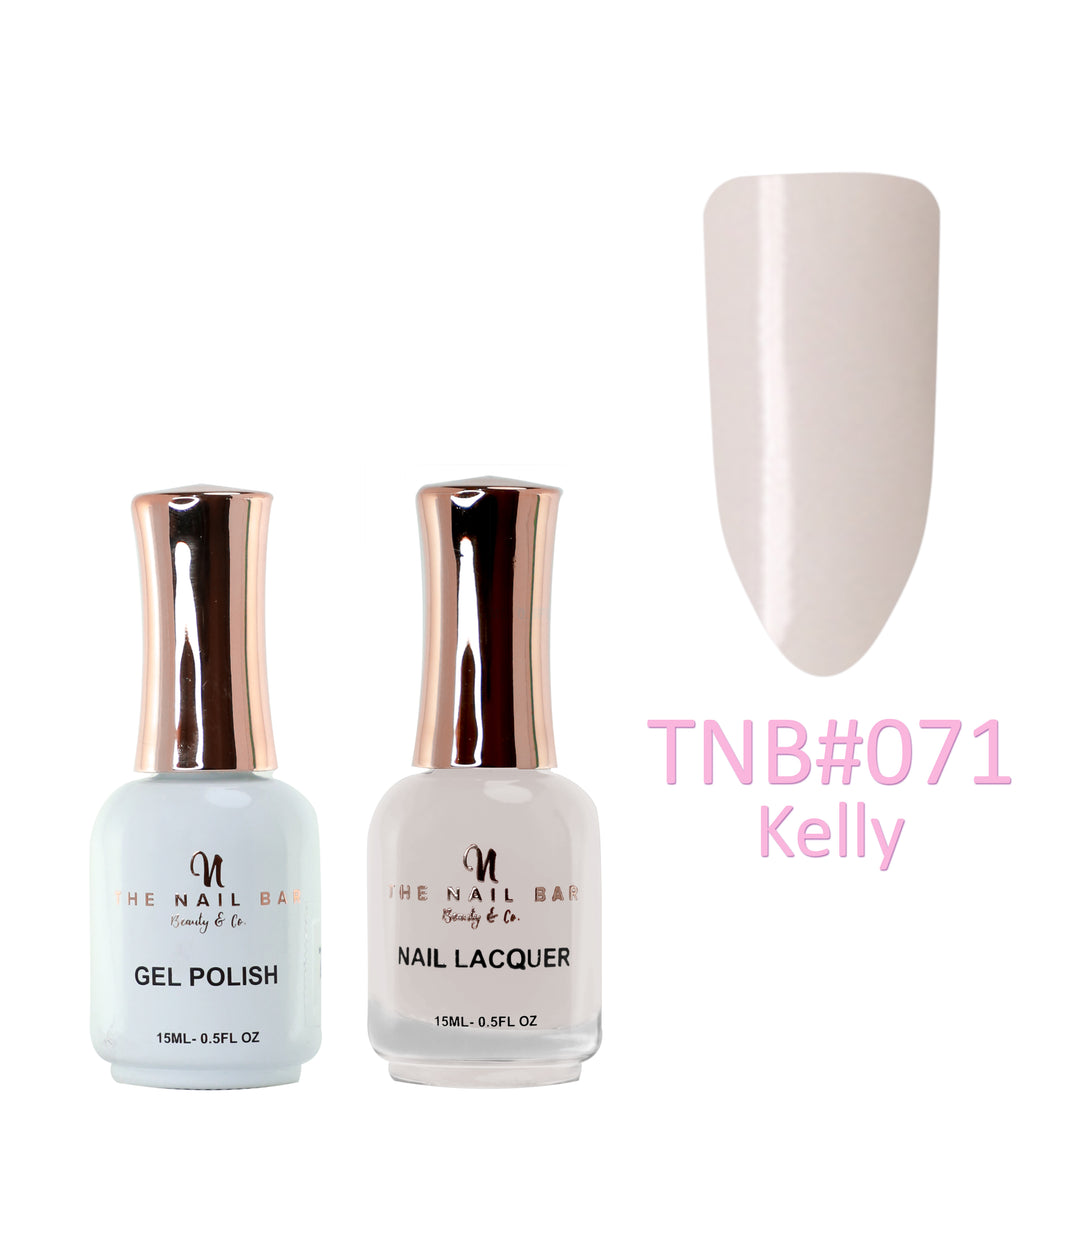 Dual Polish/Gel colour matching (15ml) - Kelly - The Nail Bar Beauty & Co.